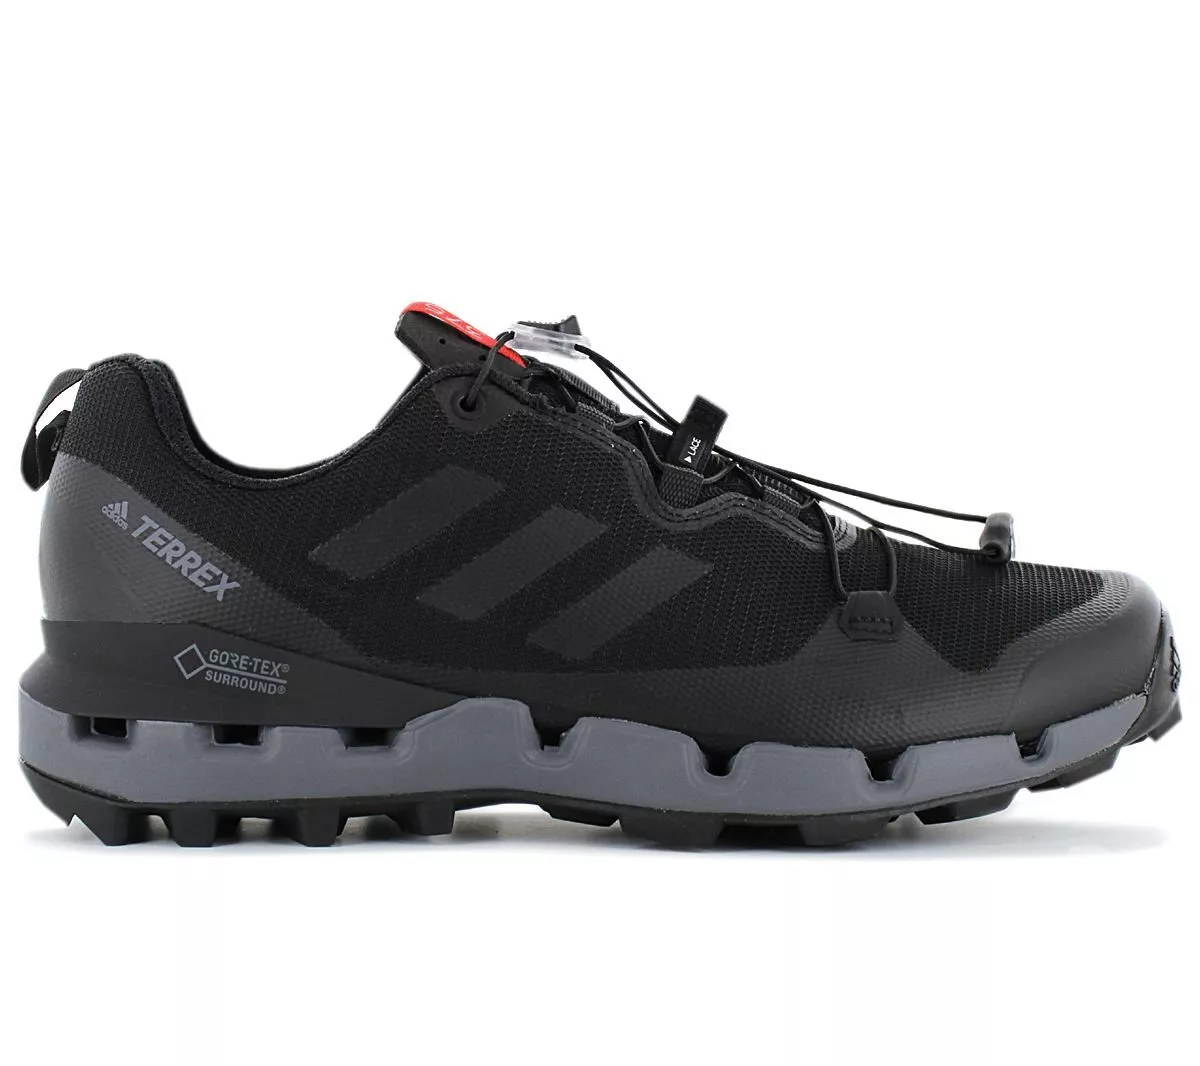 Adidas terrex Fast gtx Surround gore-tex Hiking Shoes | eBay